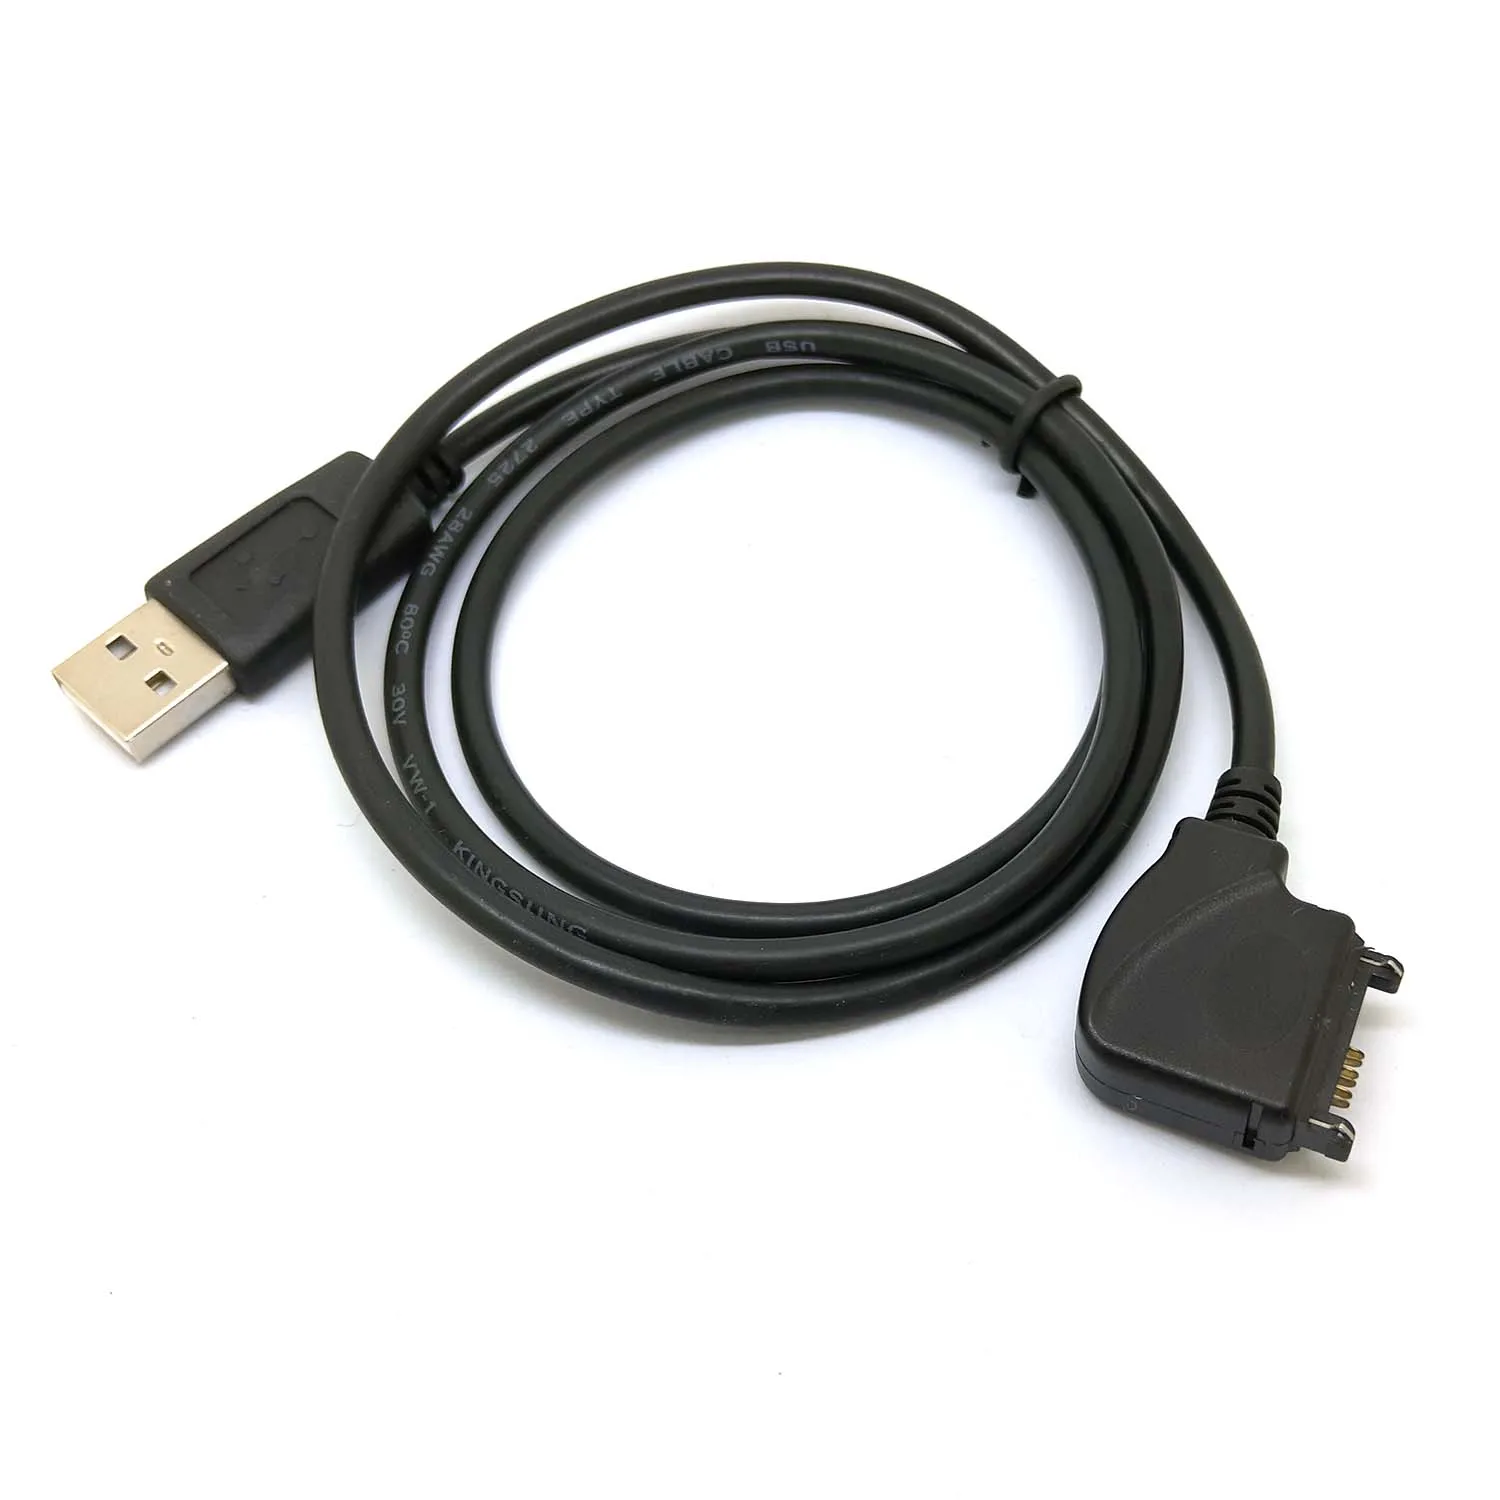 Usb-кабель для передачи данных(синхронизации) и зарядки кабеля dku-2 CA-53 для NOKIA 7610 7700 7710 9300 9500 N93 N90 N80 N71 N70 E70 E61 E62 E60 E50 7710 7610